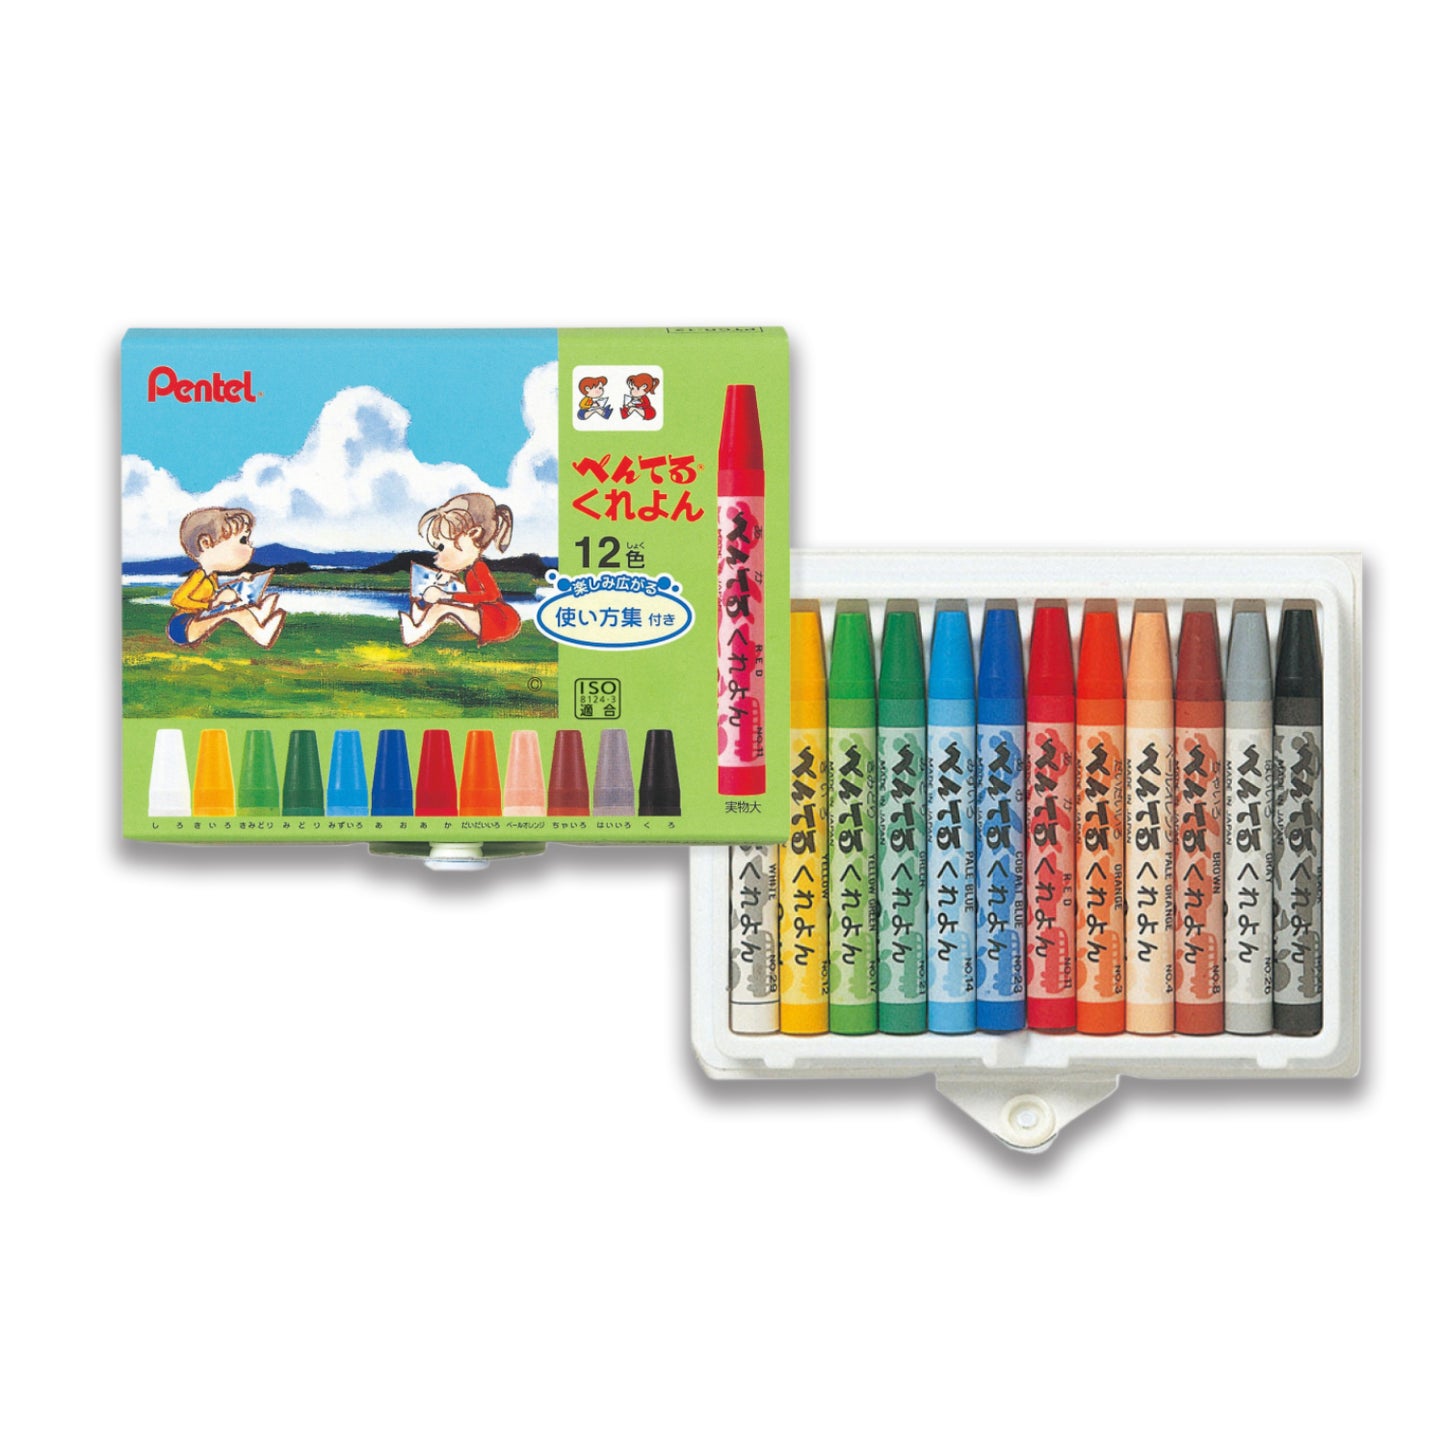 Pentel Crayon 12 colors